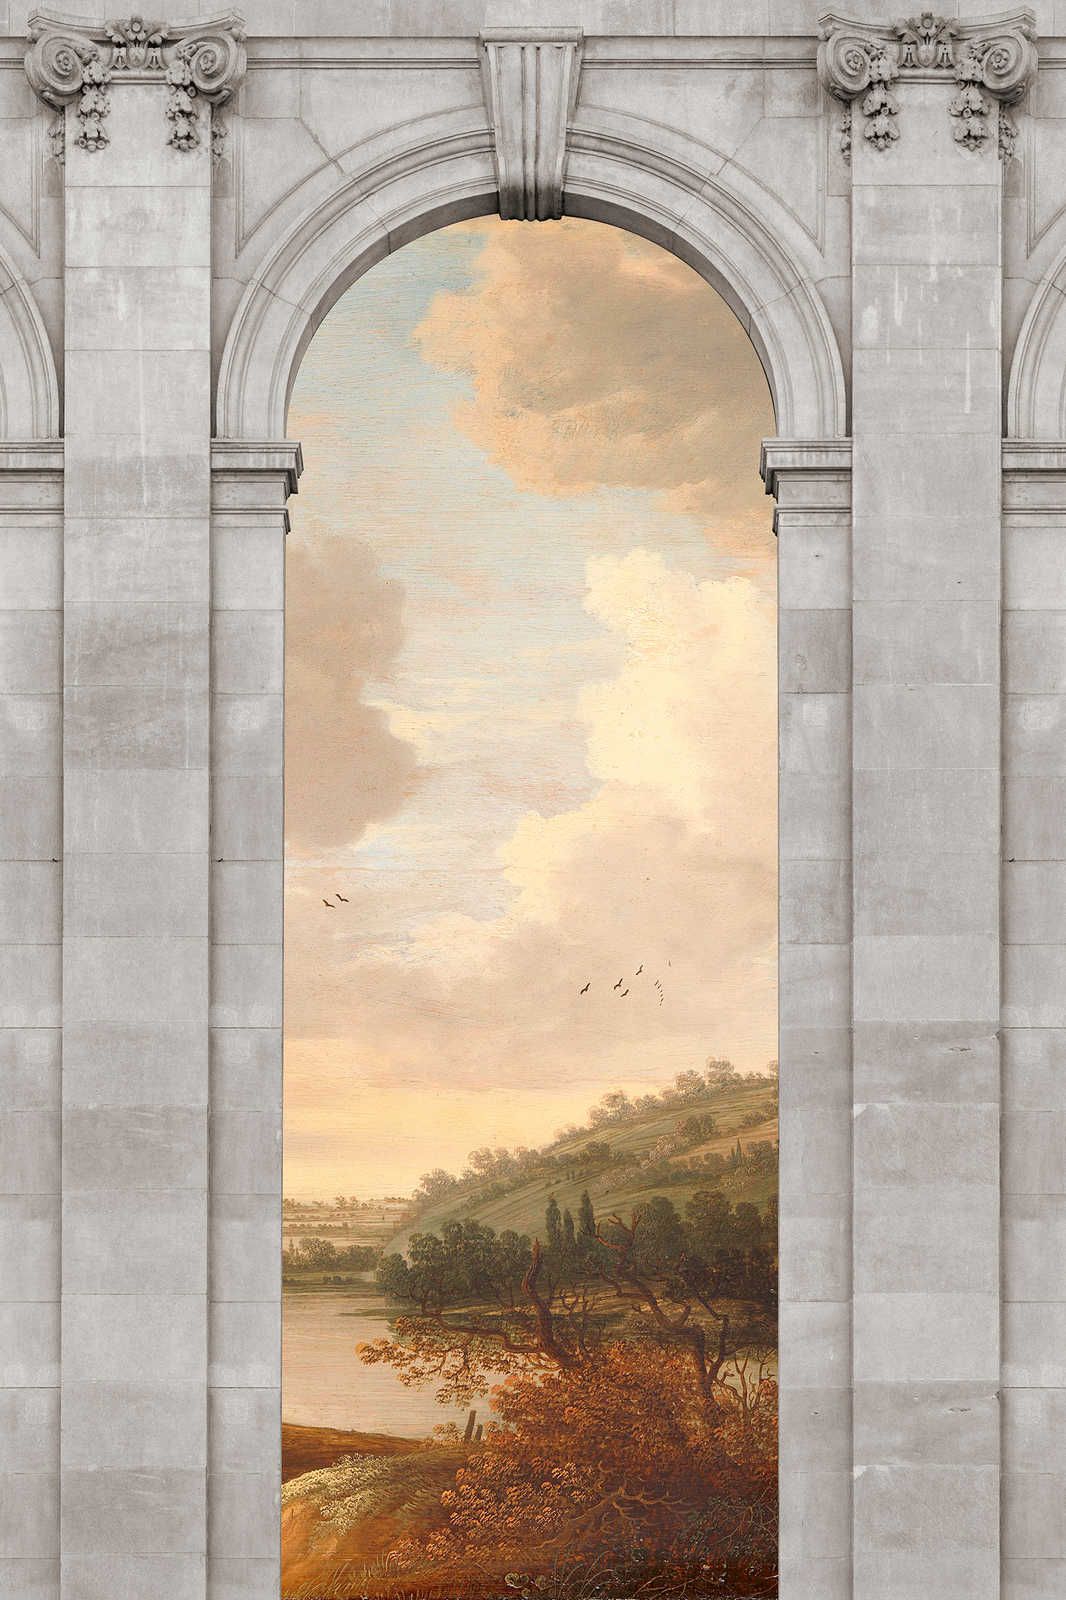             Castello 1 - Canvas schilderij Landschap & Architectuur - 0.90 m x 0.60 m
        